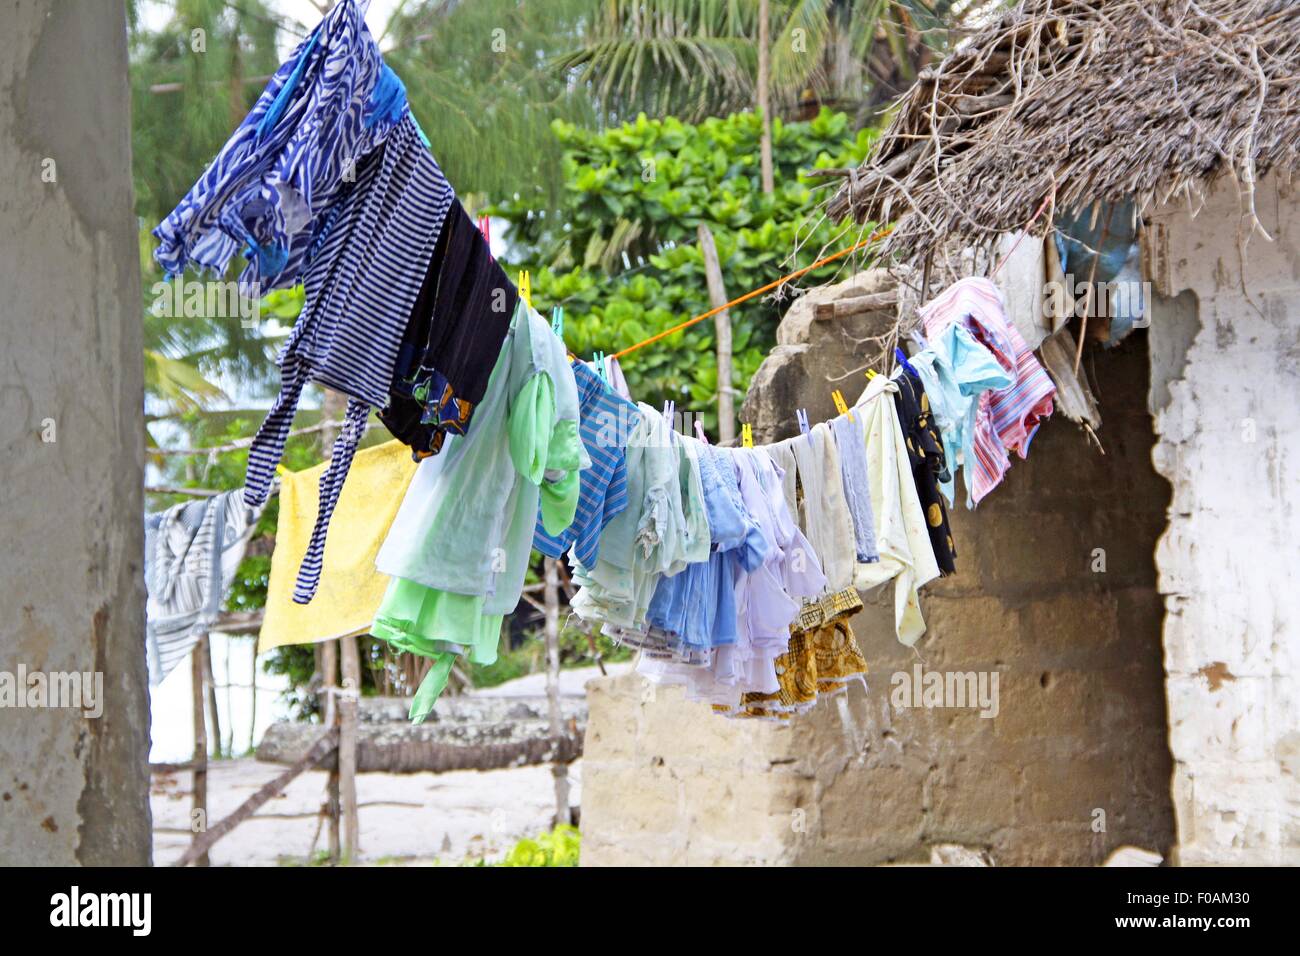 Clothes drying on rope in Zanzibar, Tanzania, East Africa Stock Photo -  Alamy